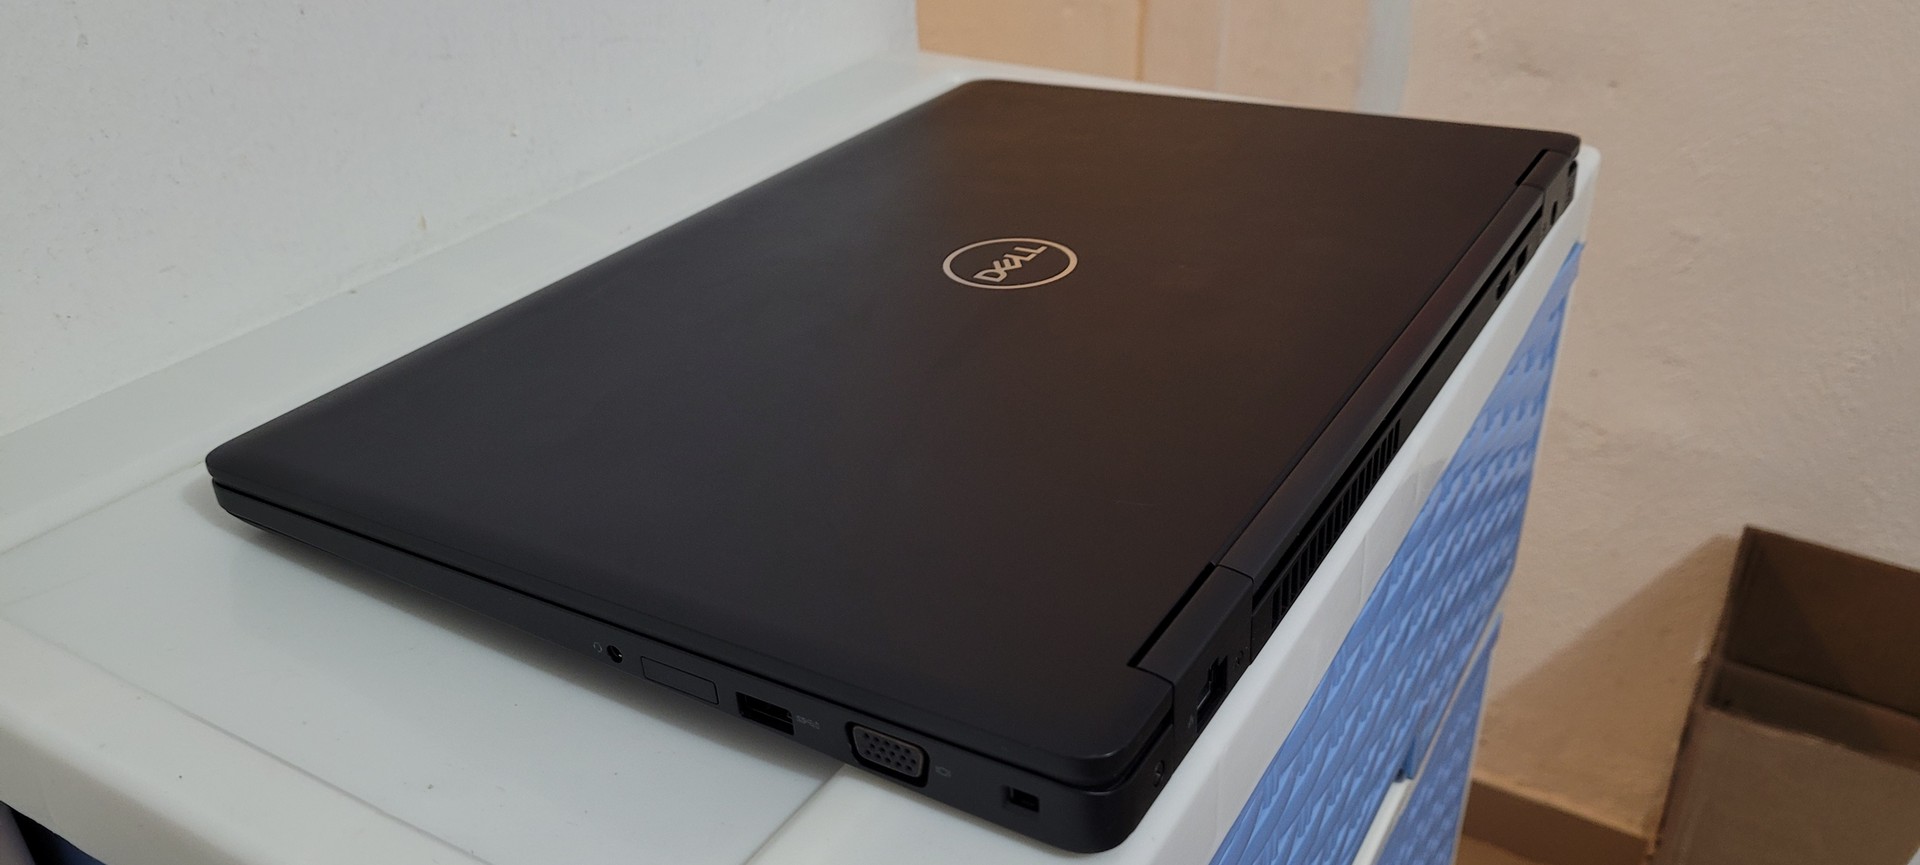 computadoras y laptops - Dell 5580 17 Pulg Core i5 7ma Gen Ram 12gb ddr4 Disco 256gb SSD Nvidea 940mx 6gb 2